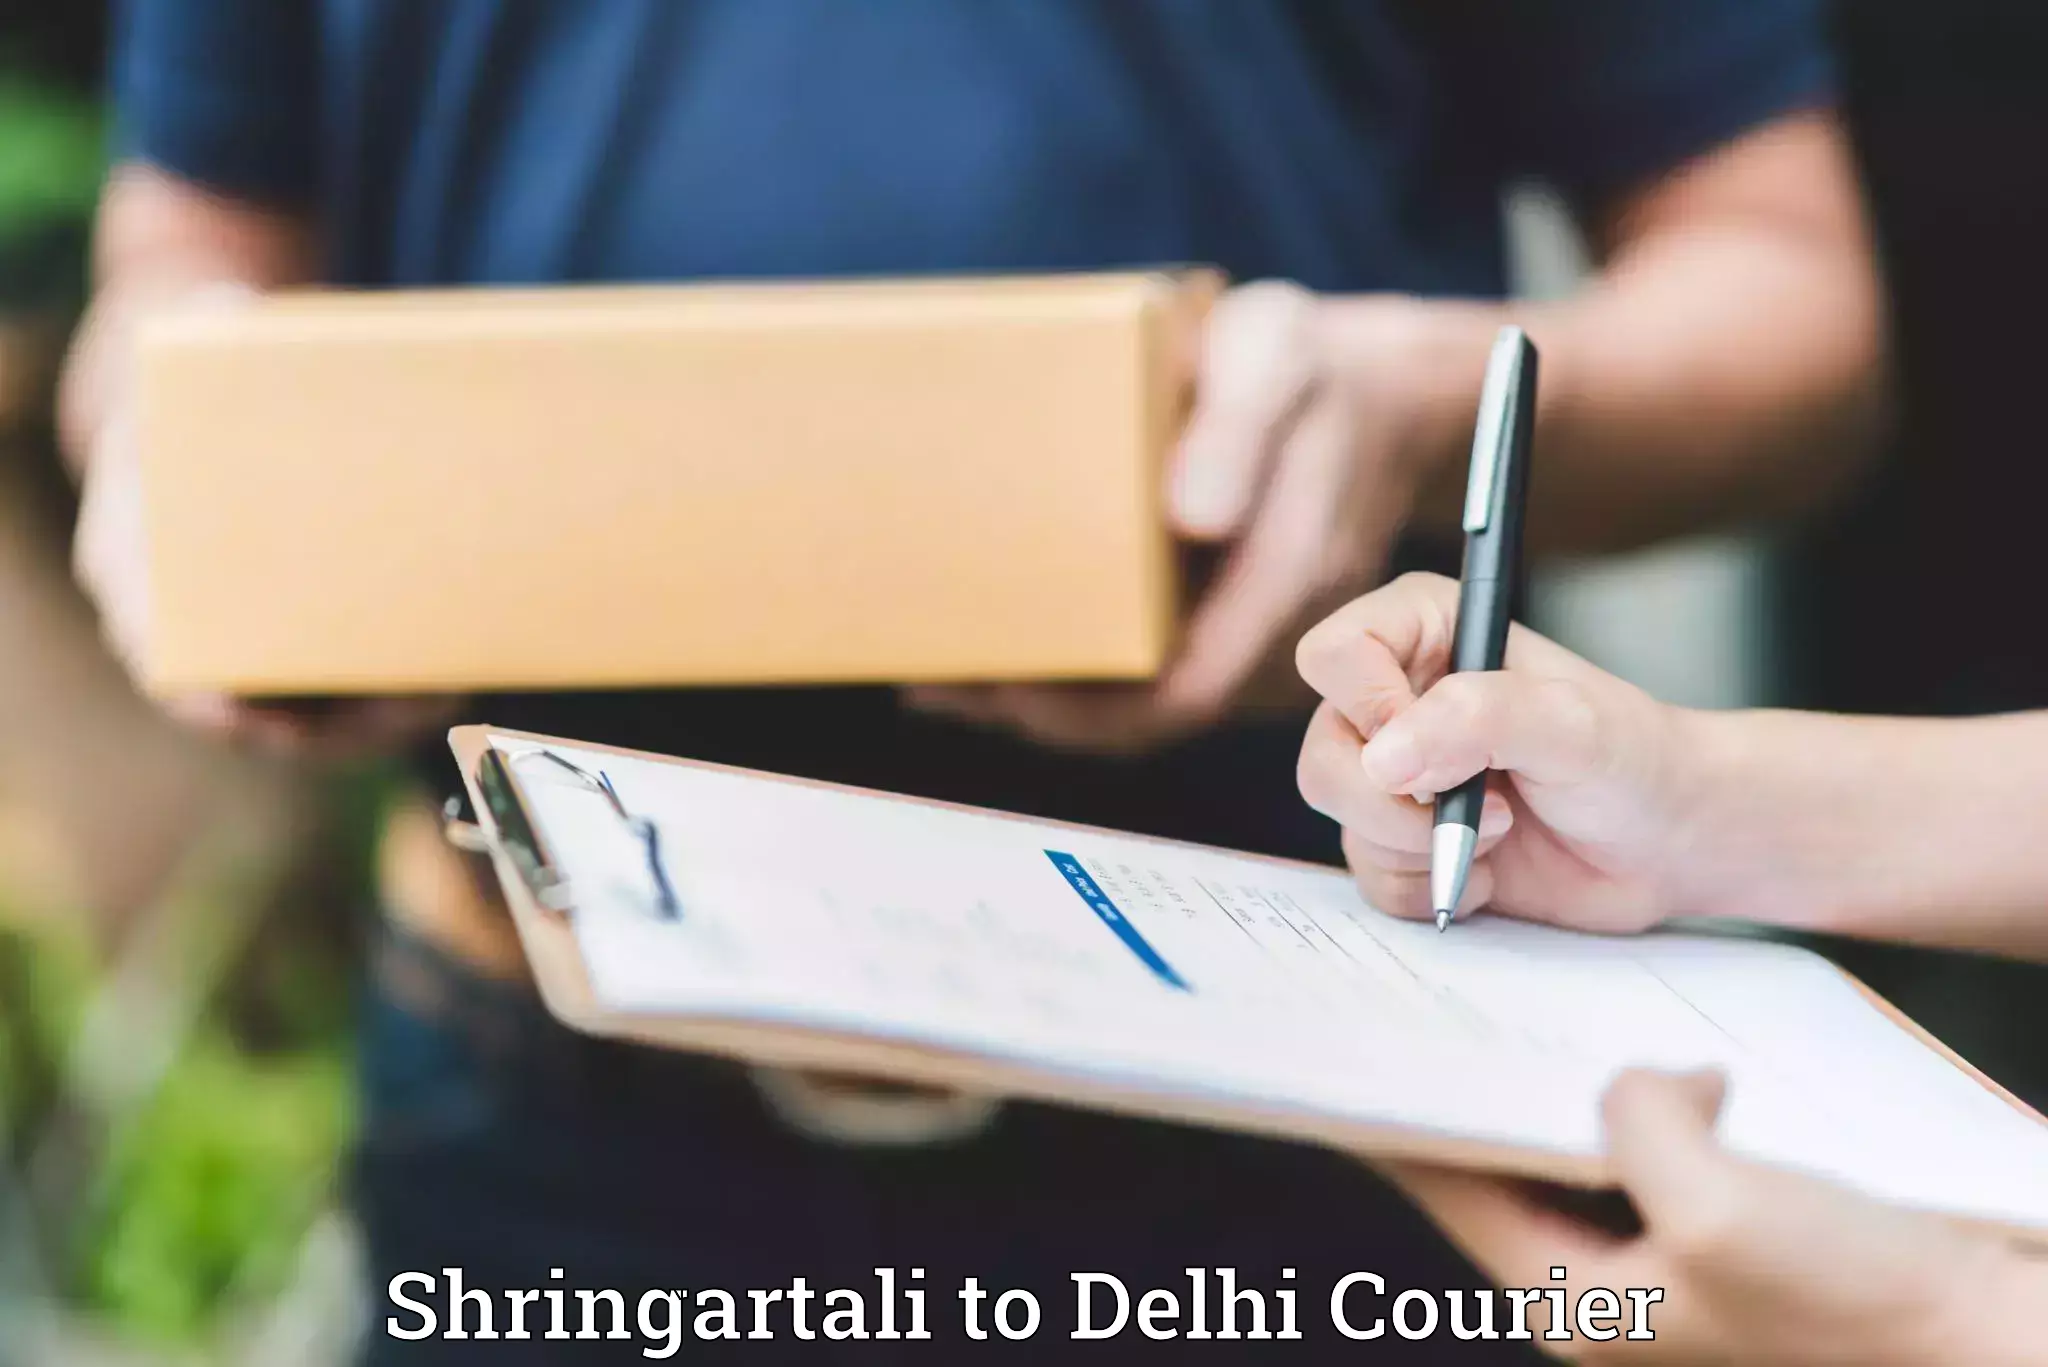 Luggage delivery app Shringartali to East Delhi